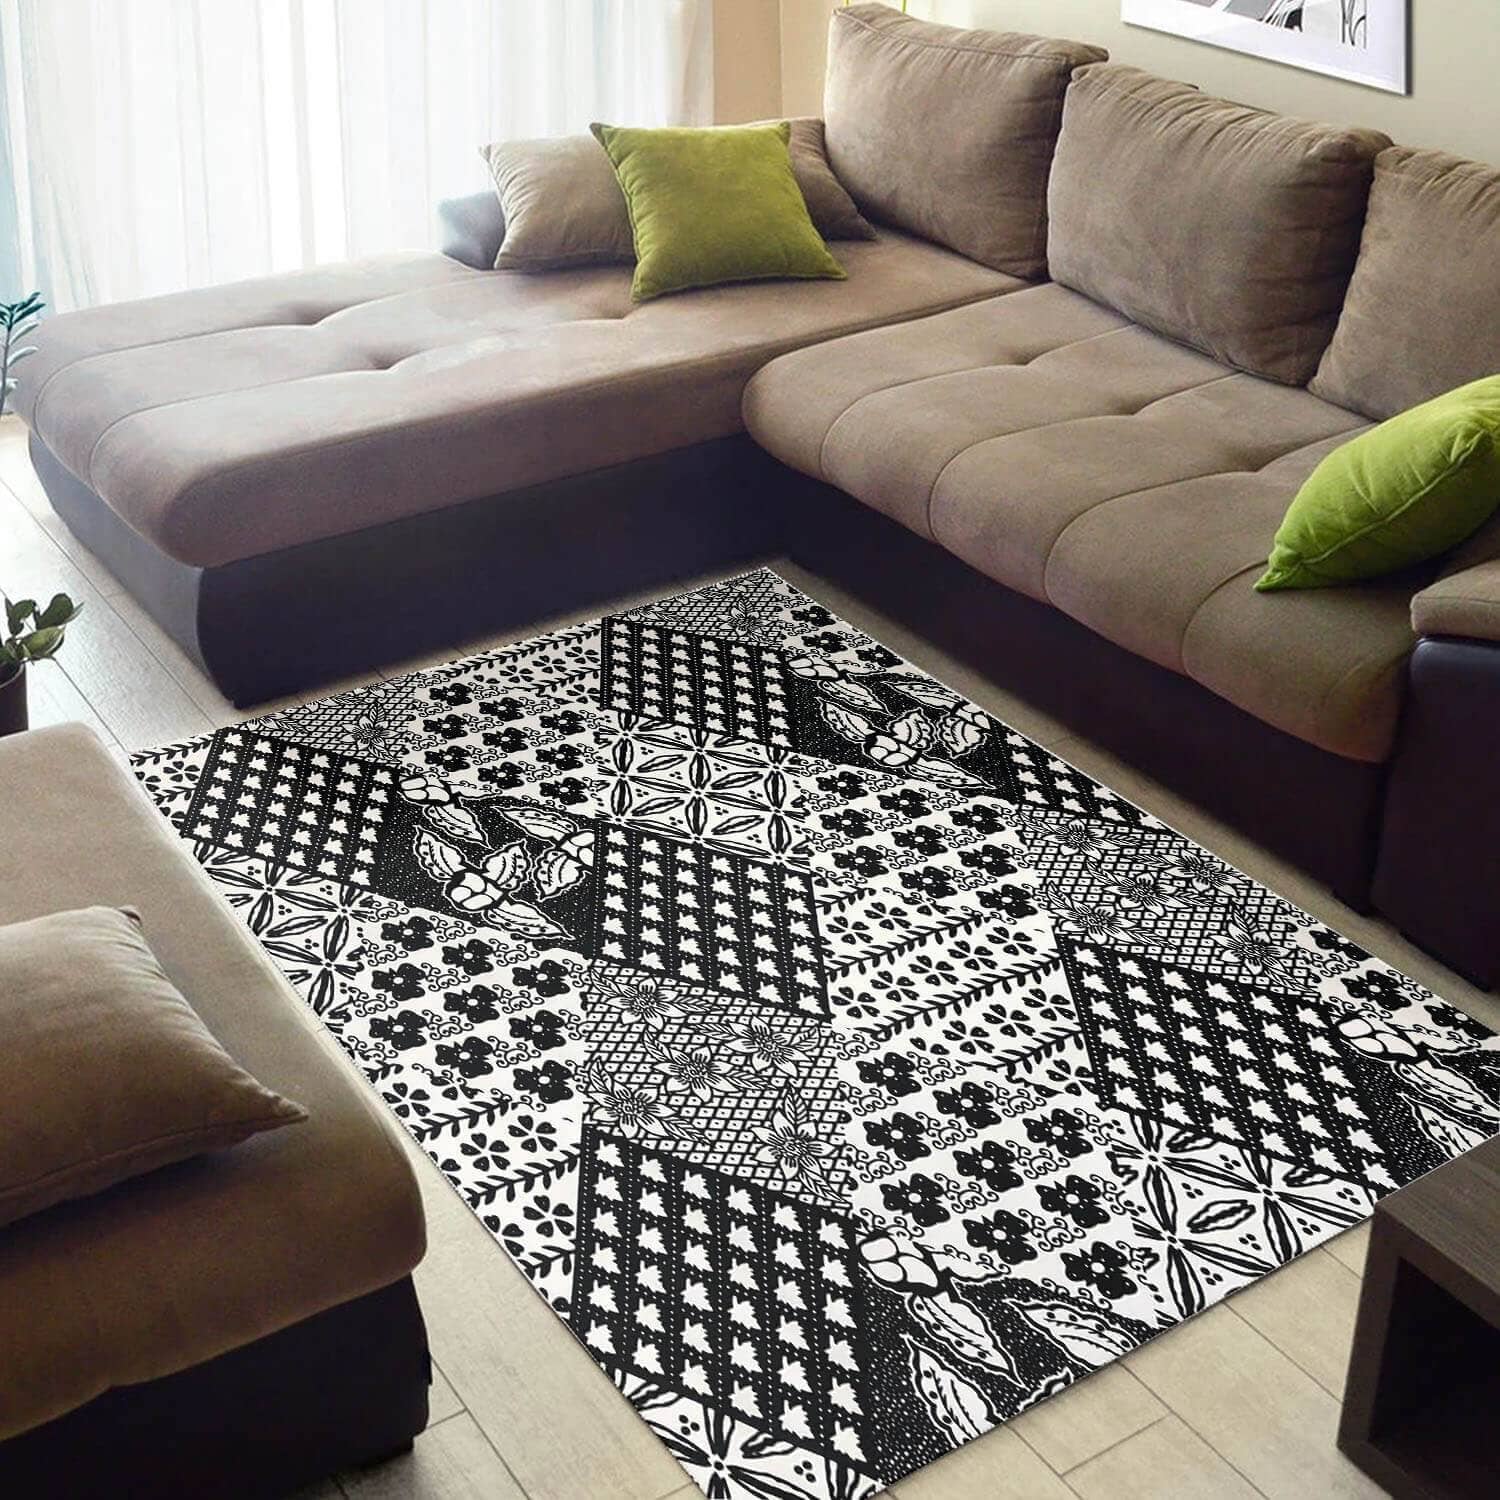 Cool African Style Vintage American Ethnic Seamless Pattern Design Floor Inspired Living Room Rug